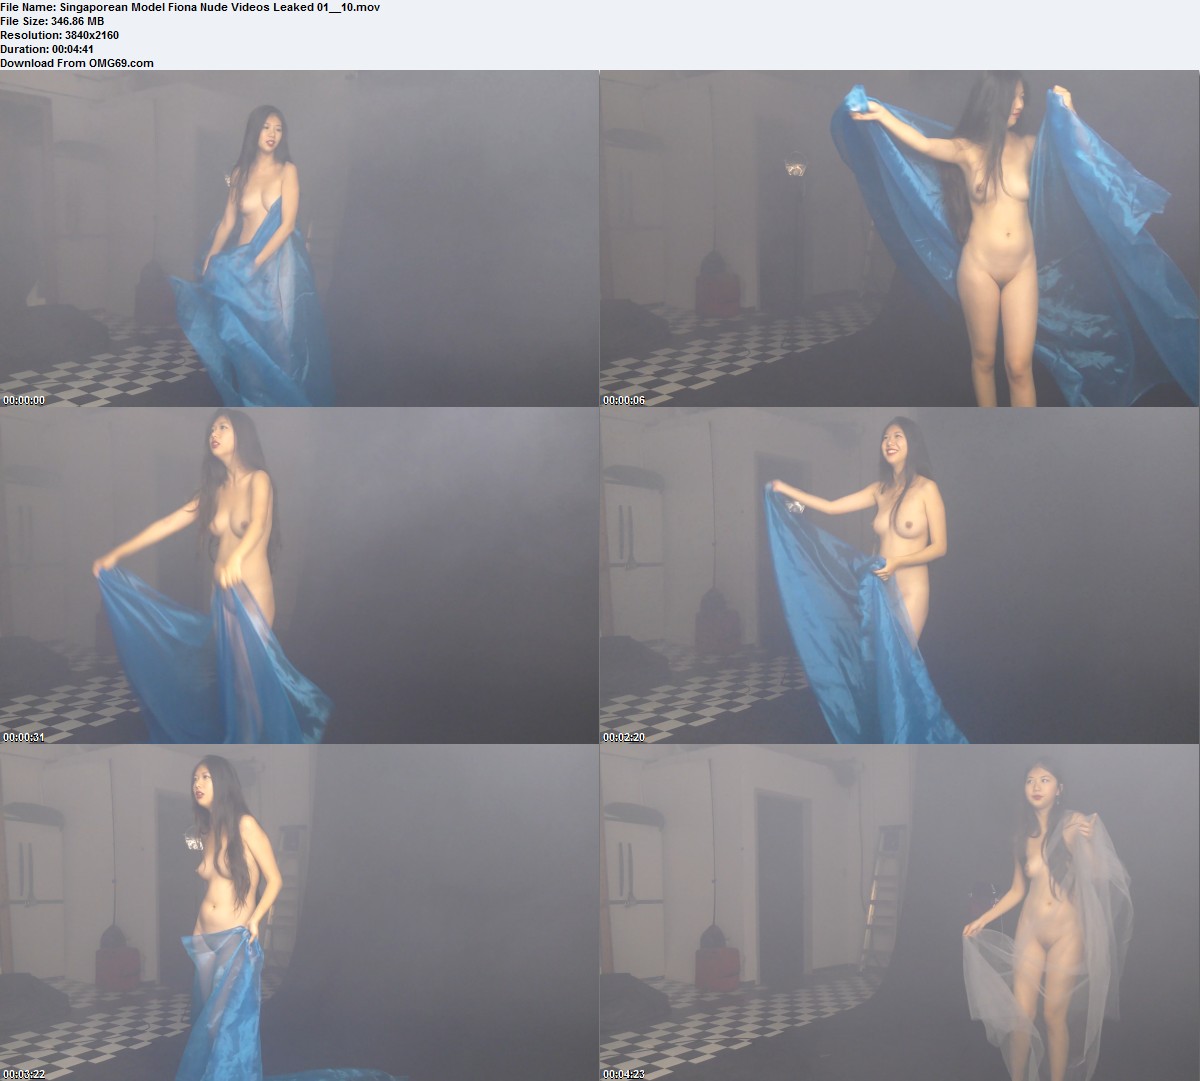 Singaporean Model Fiona Nude Videos Leaked 01